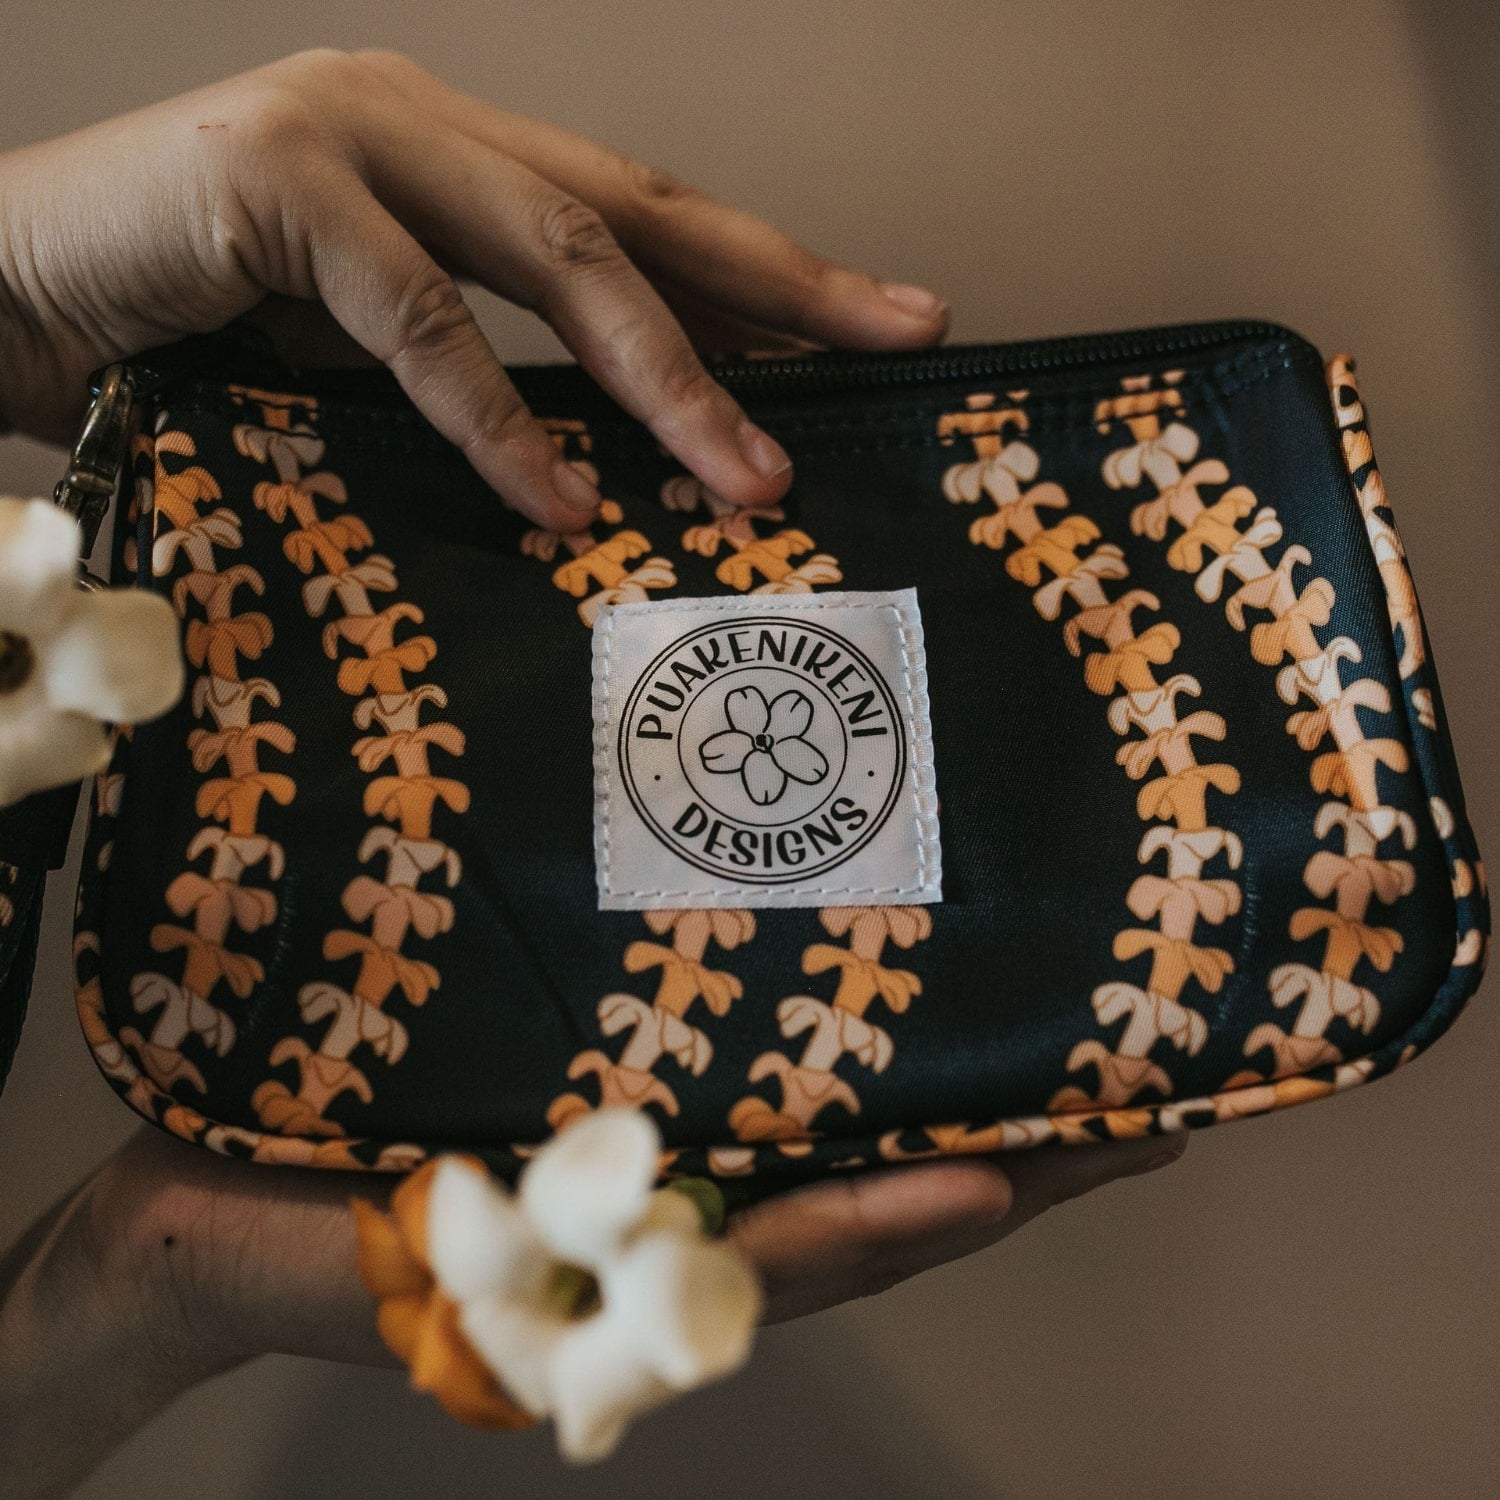 grab and go set includes mini zipper pouch and wristlet key fob in kaulua black orange lei - from Puakenikeni Designs - model holding with pua kenikeni flowers